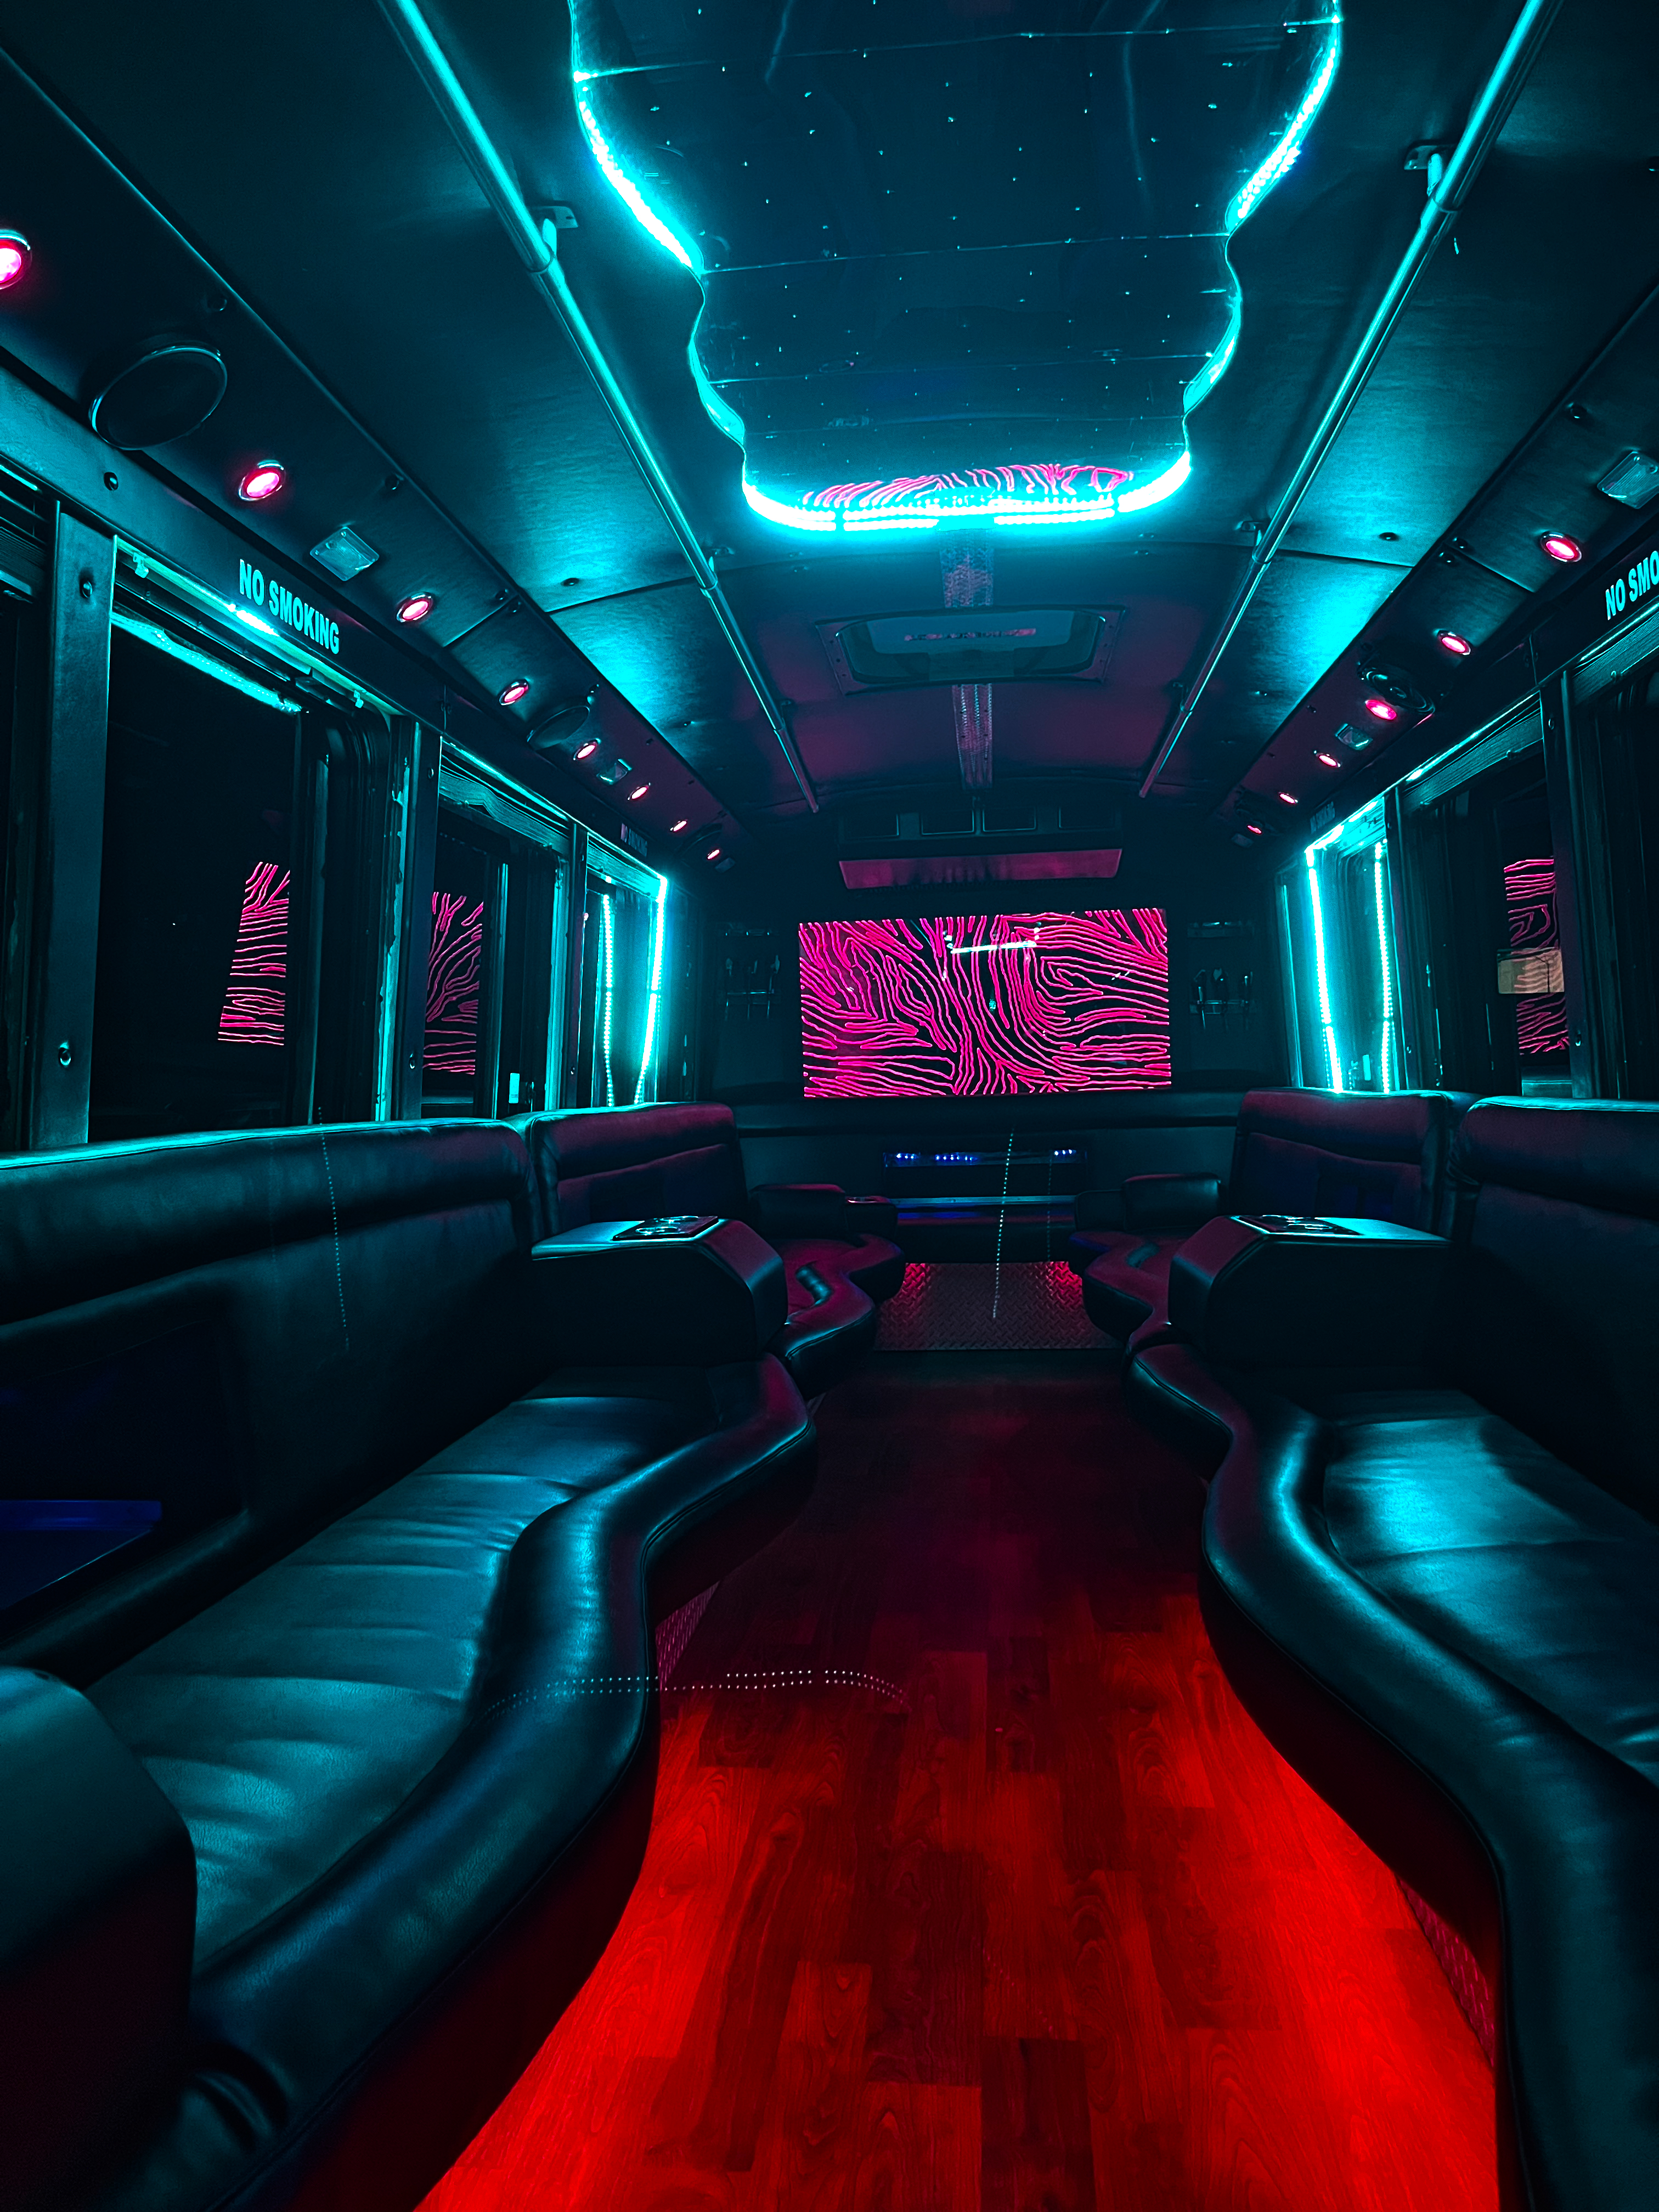 716 Limousine Fleet - gallery image of 20 pax luxury limousine buses